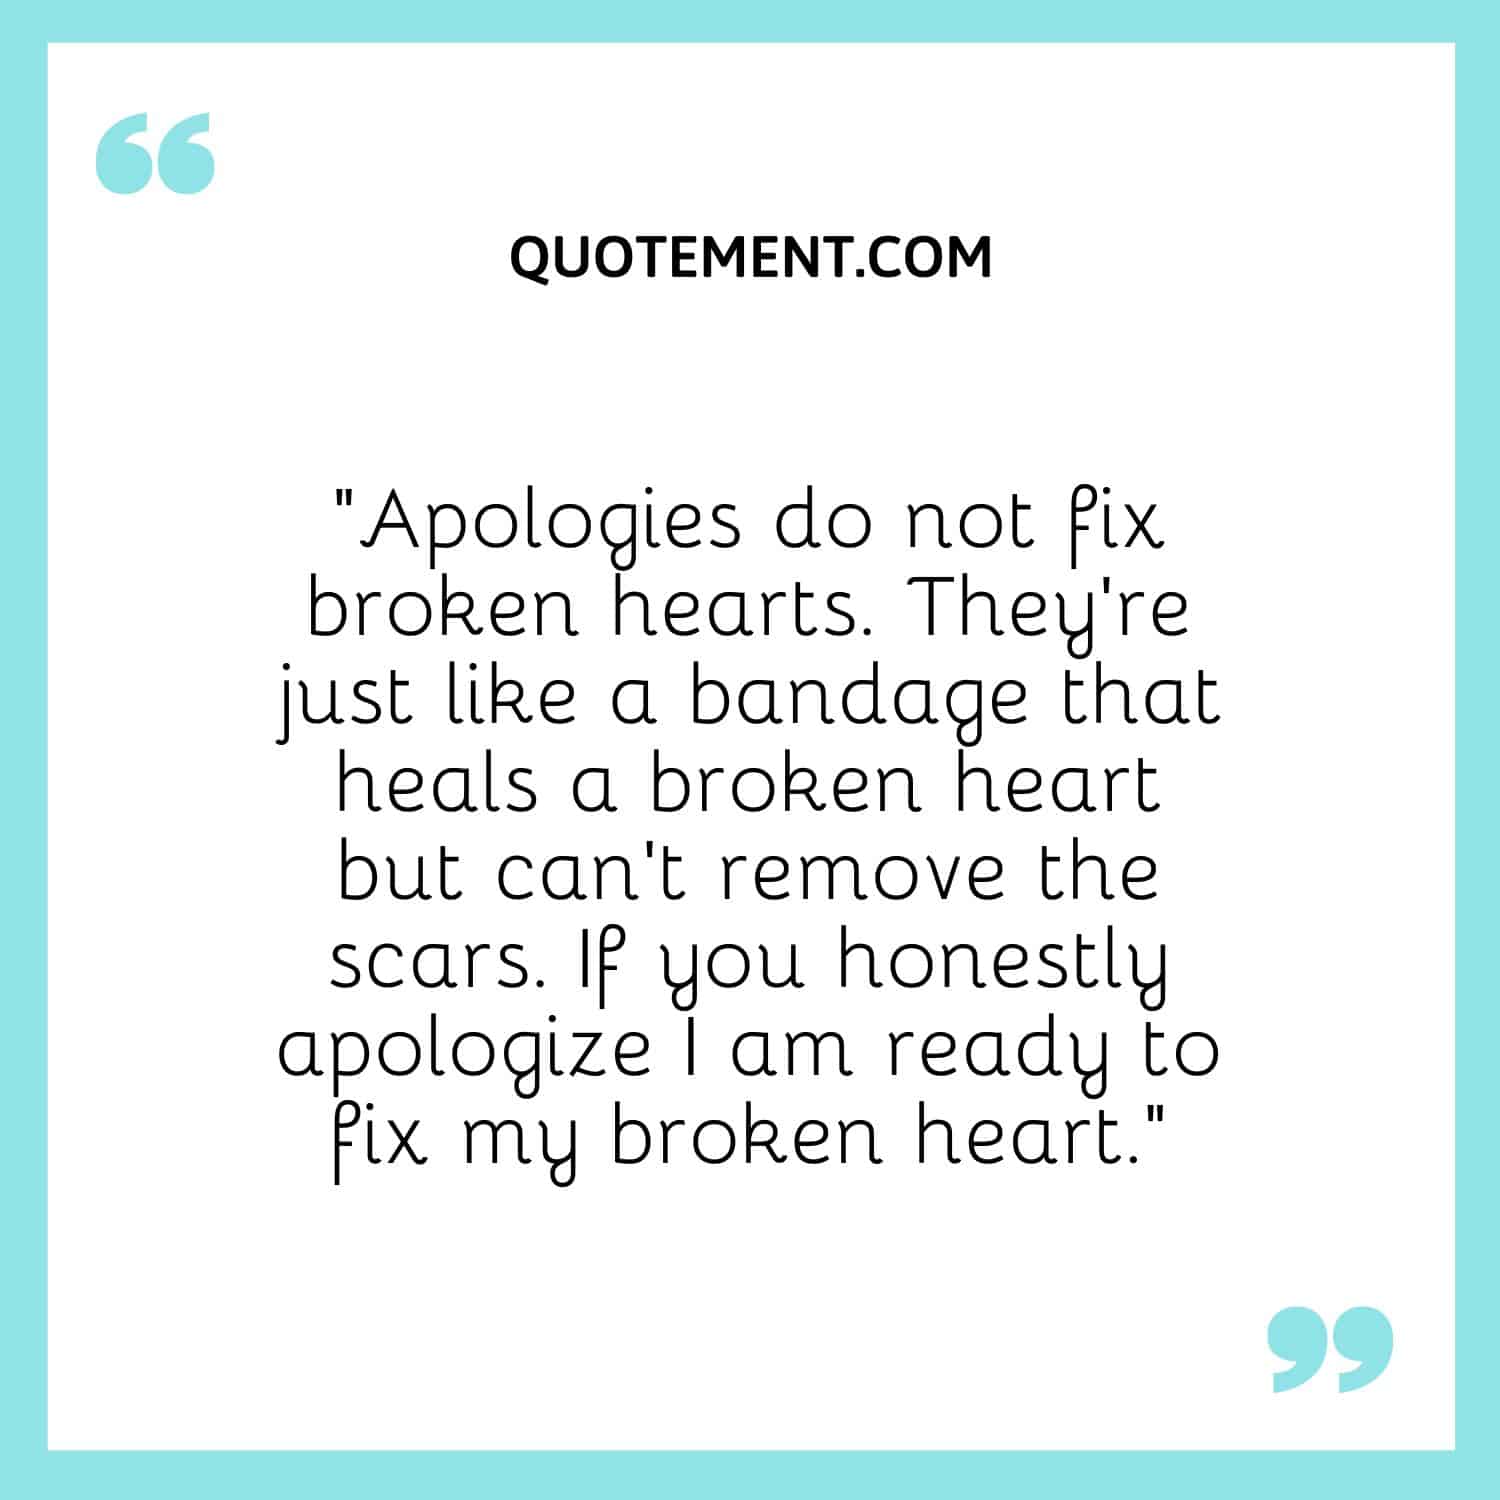 Apologies do not fix broken hearts